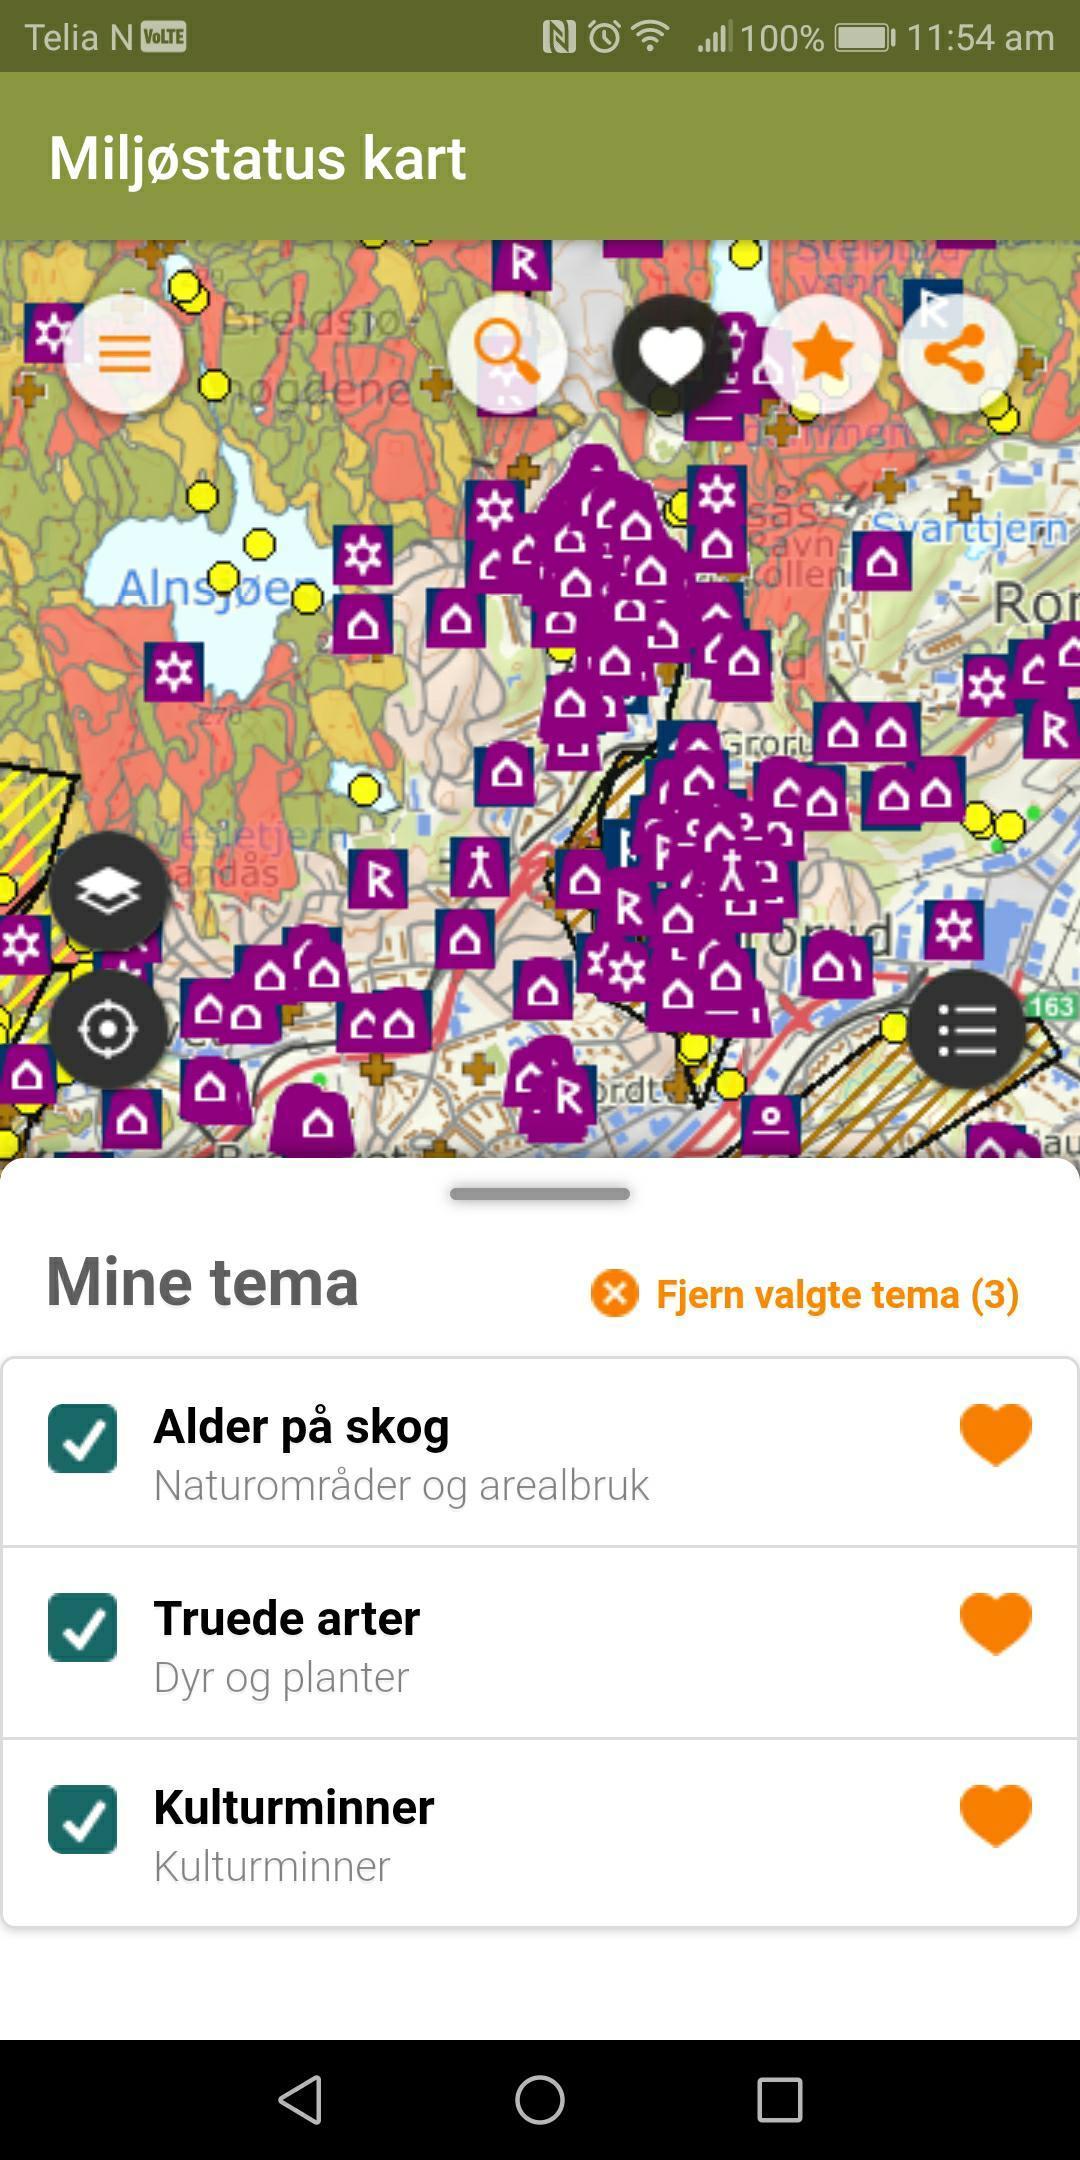 miljøstatus kart Miljostatus Kart For Android Apk Download miljøstatus kart